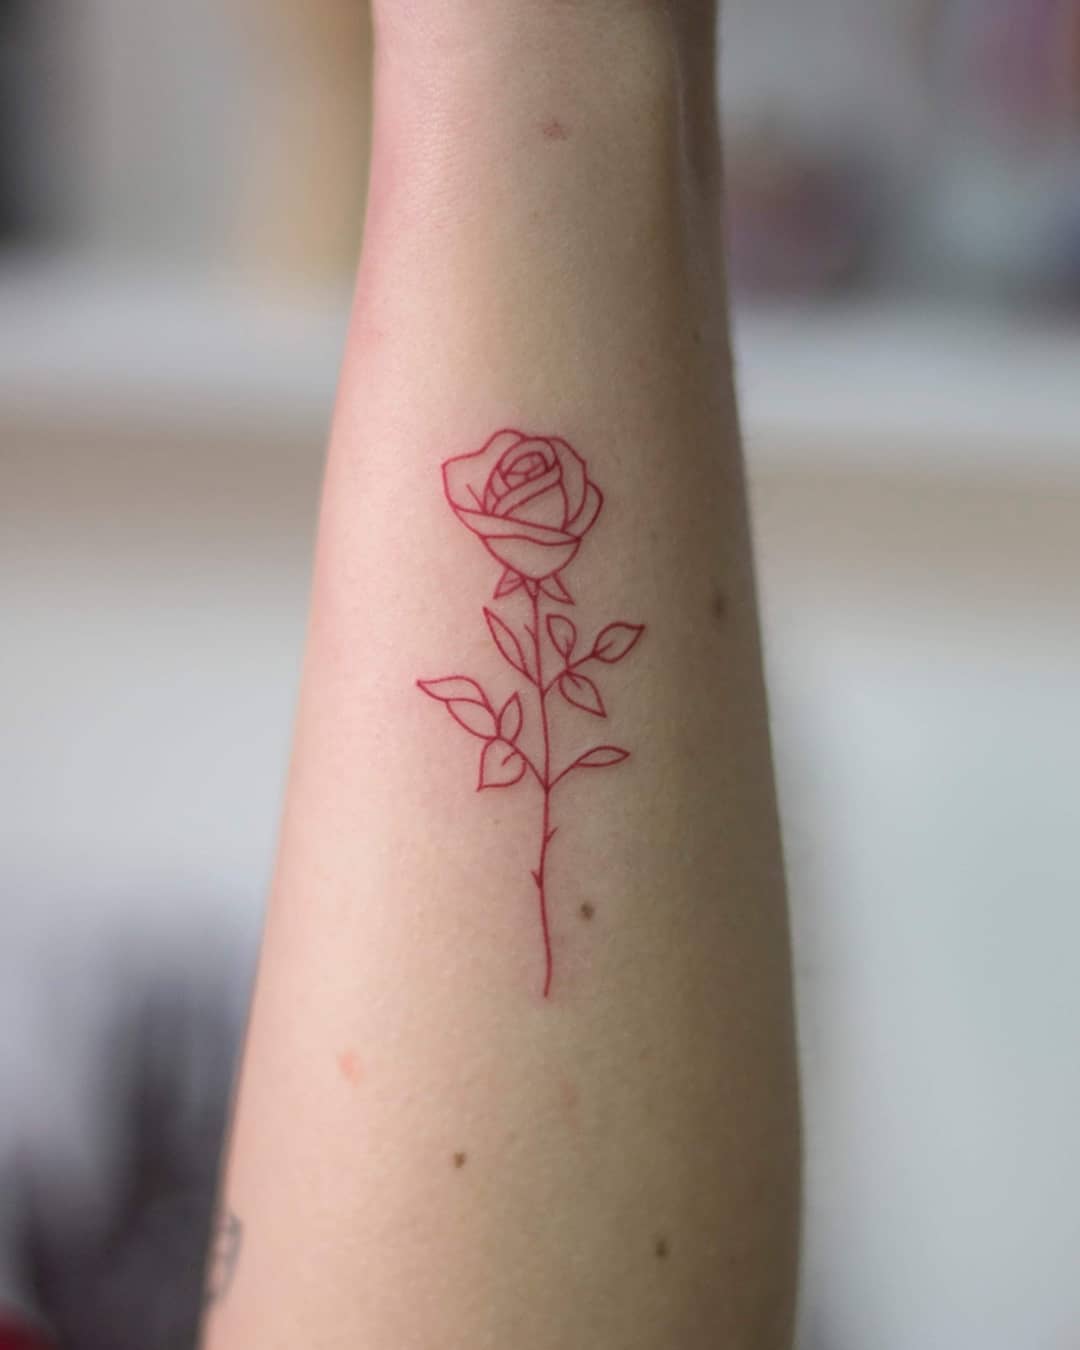 Red rose by tattooist Fury Art